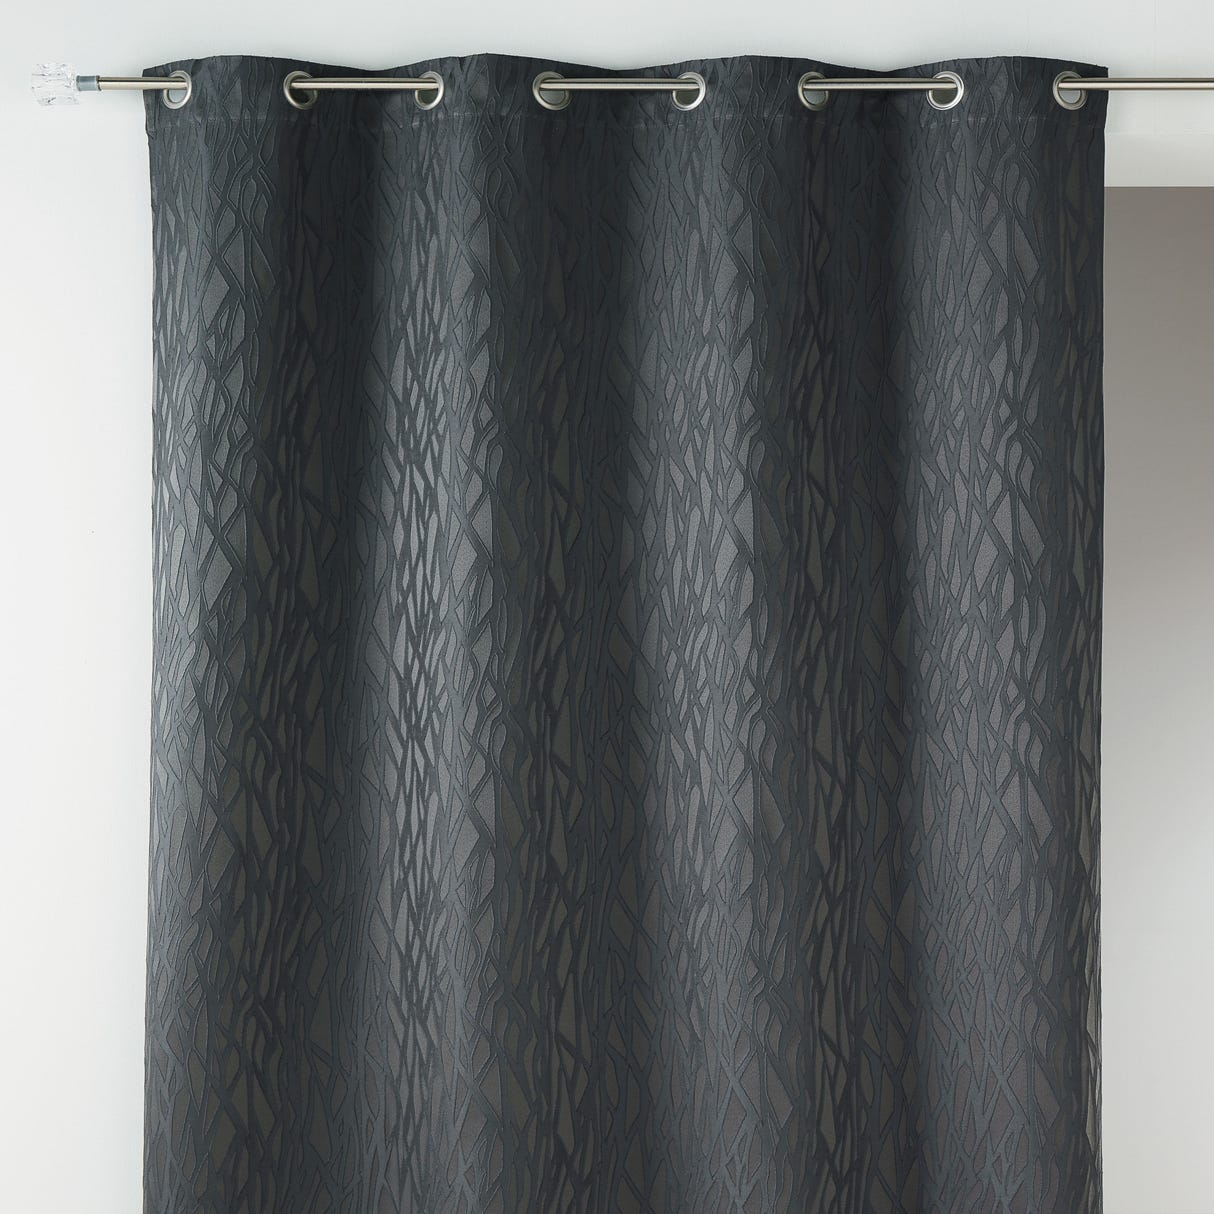 Barra cortina cuero extensible 120-210 cms